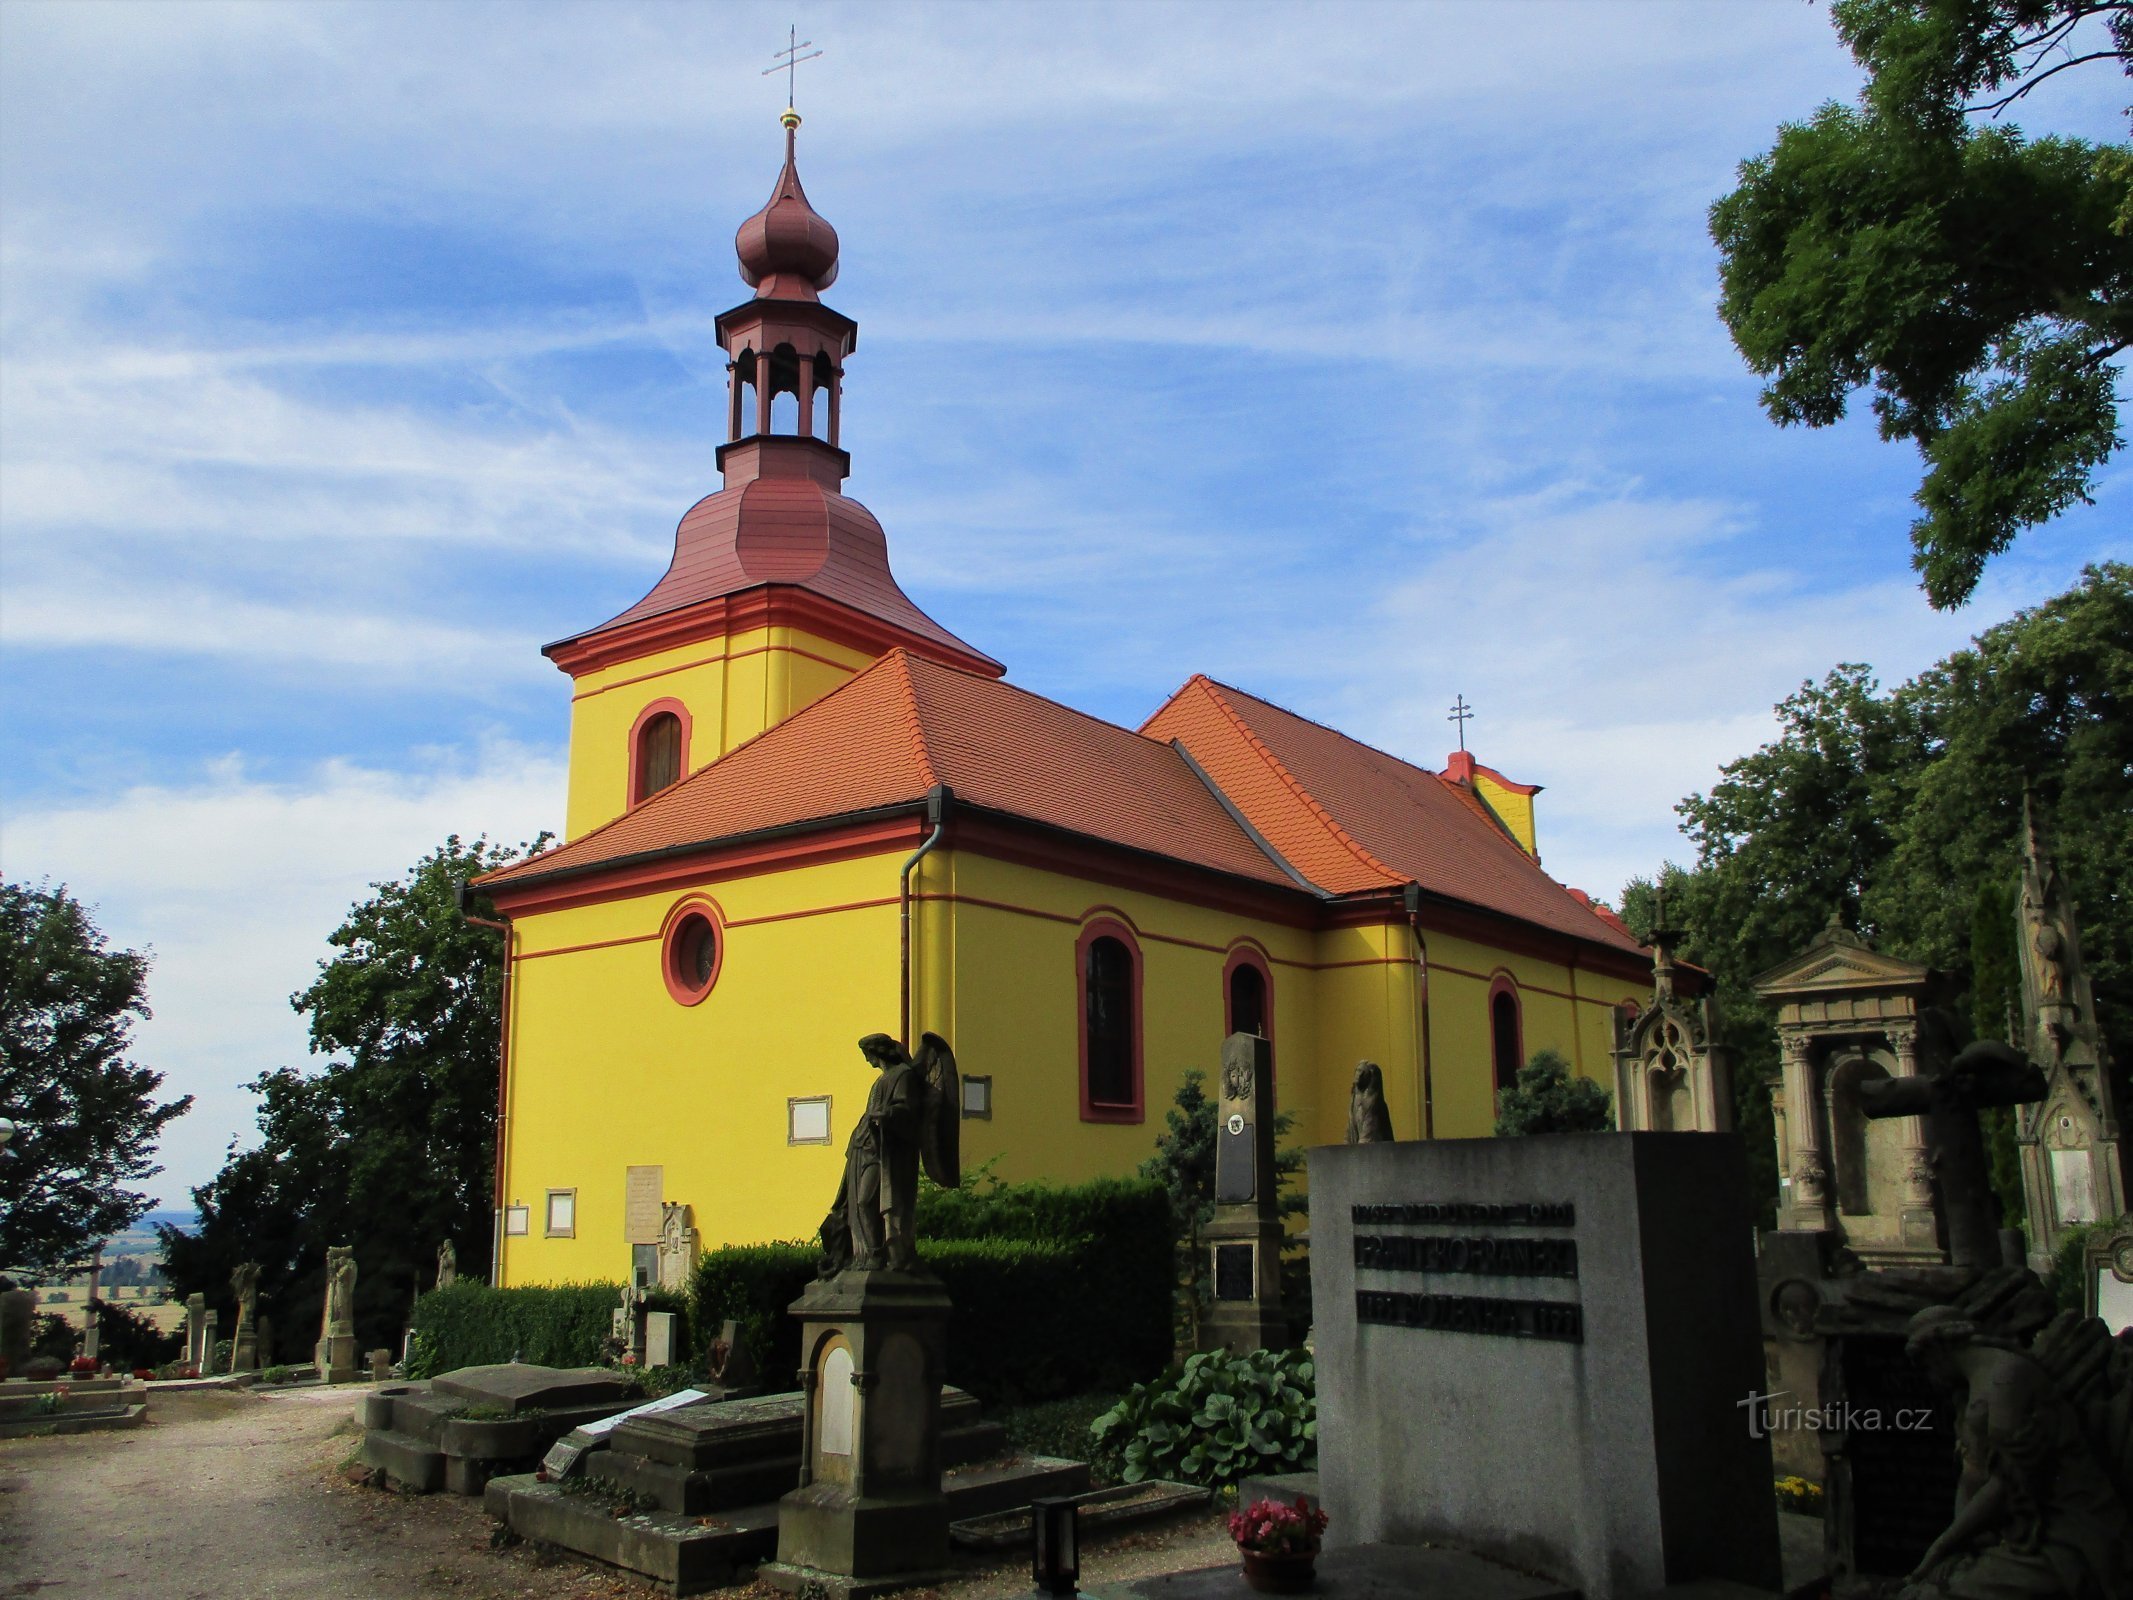 Cemitério Igreja de S. Gothard, bispo (Hořice, 26.7.2020/XNUMX/XNUMX)